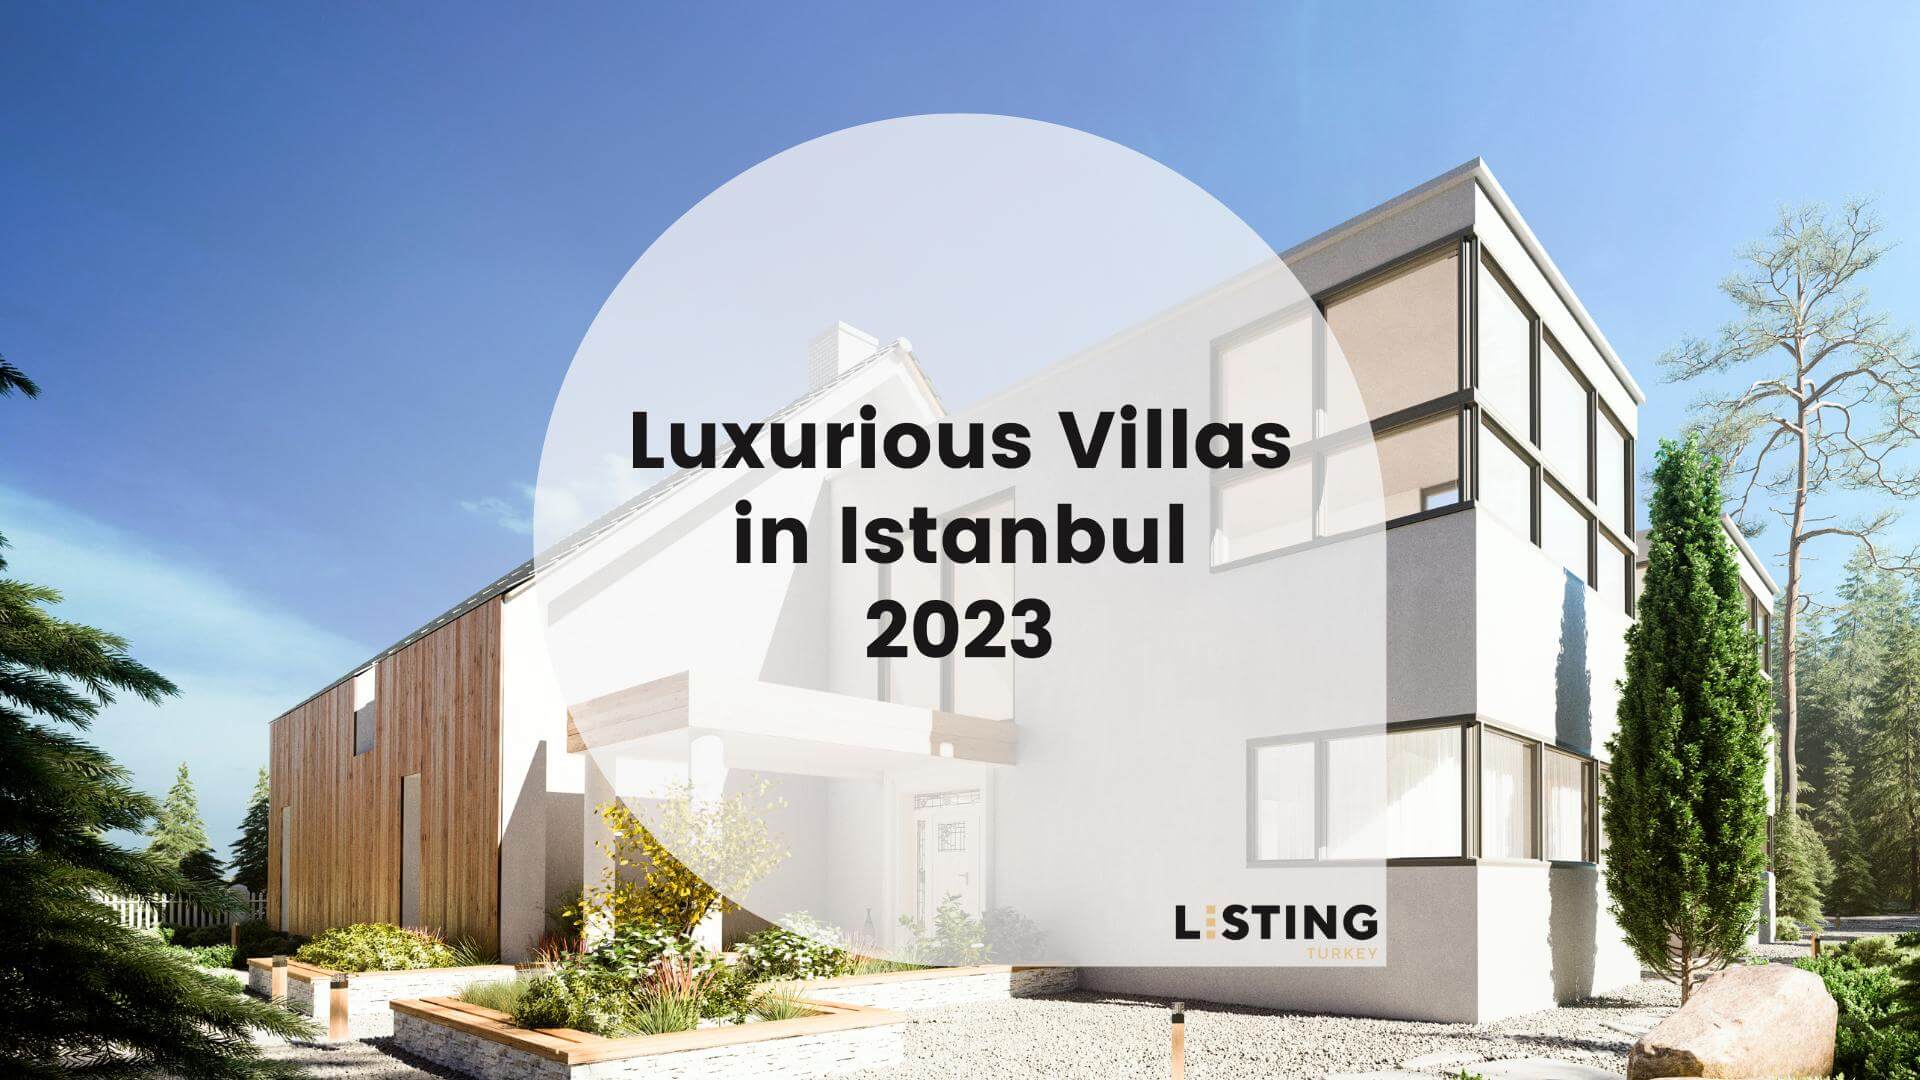 Luxurious Villas in Istanbul